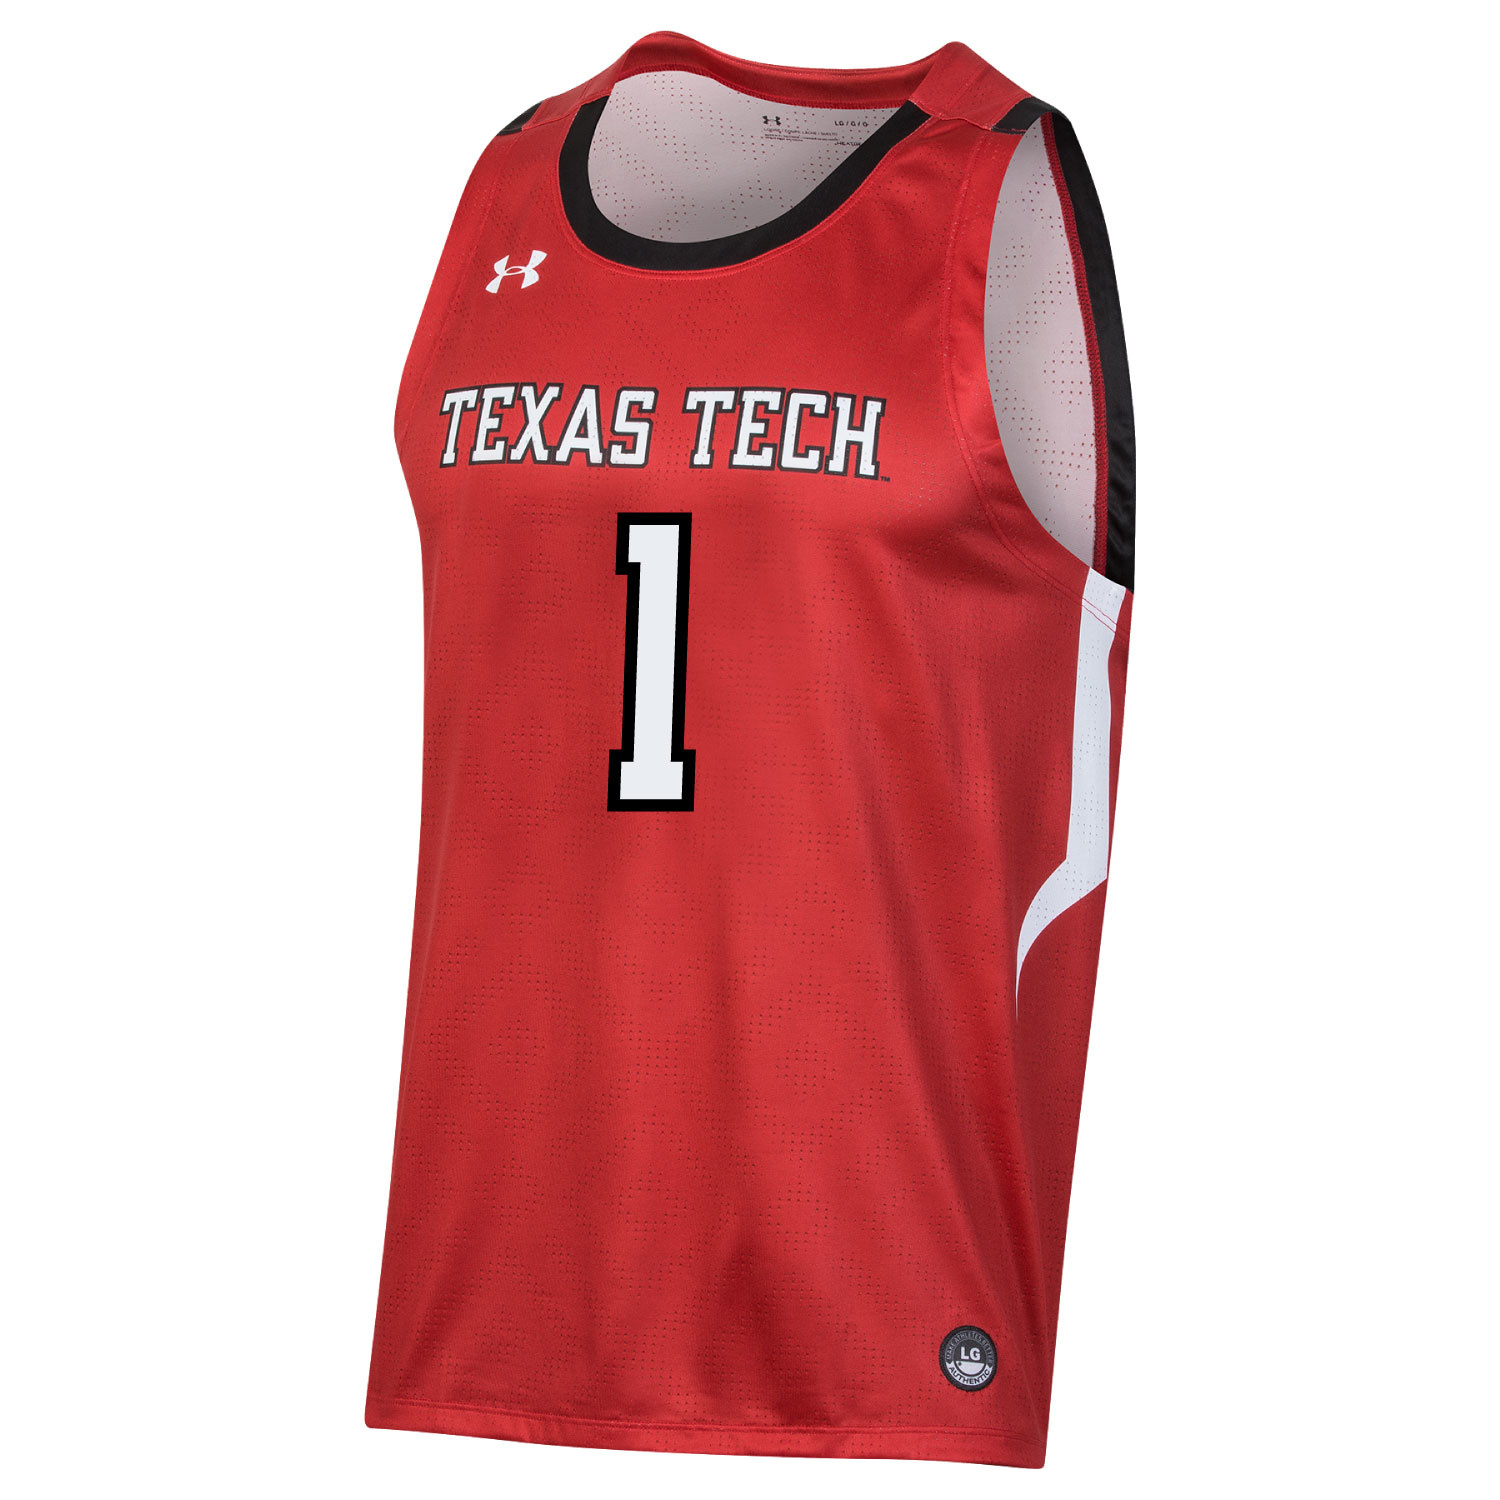 texas tech youth basketball jersey